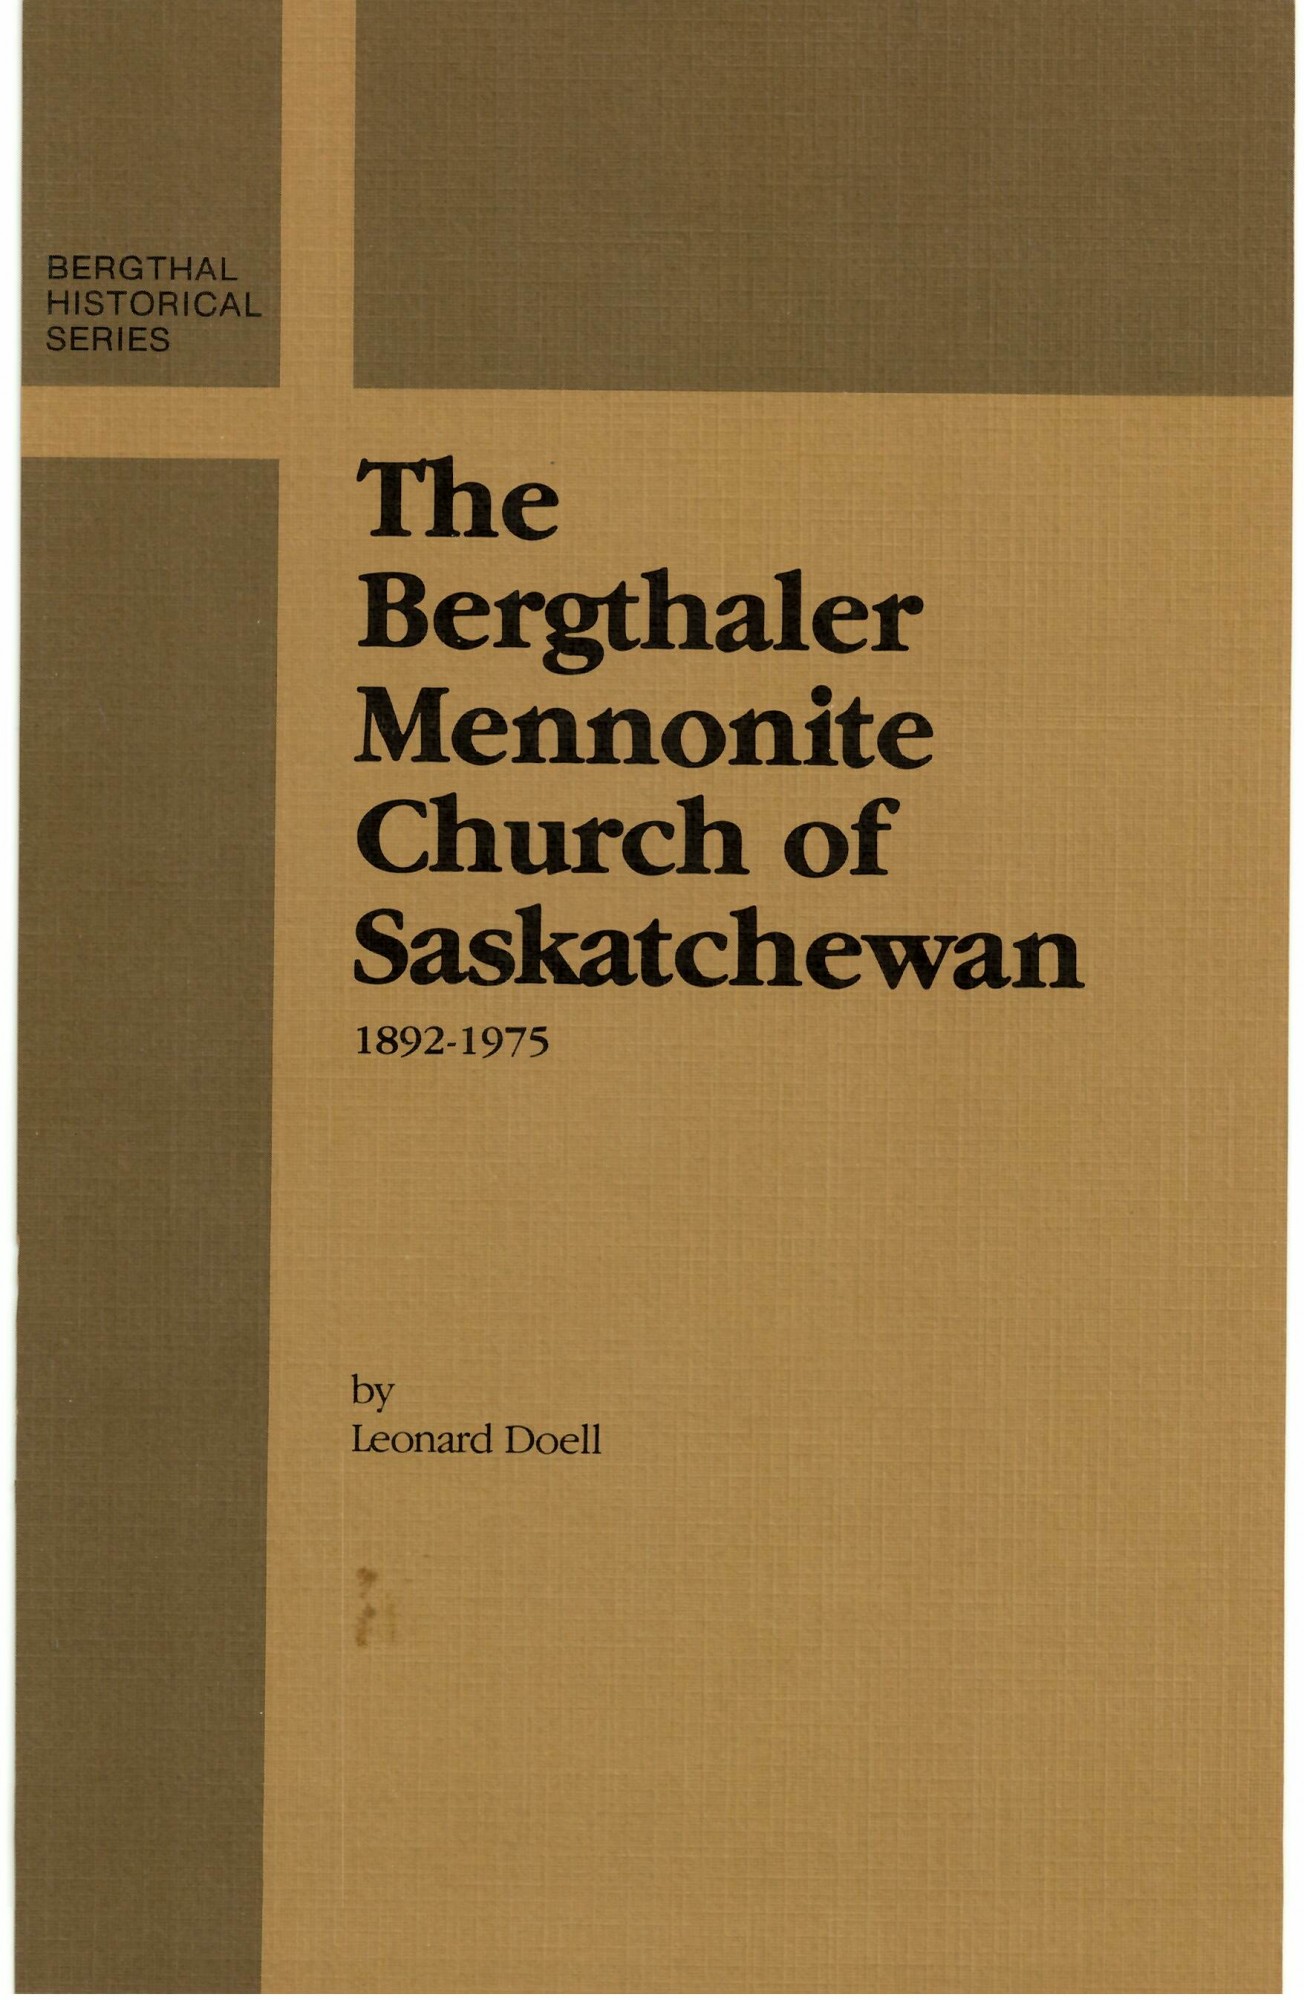 The Bergthaler Mennonite Church of Saskatchewan